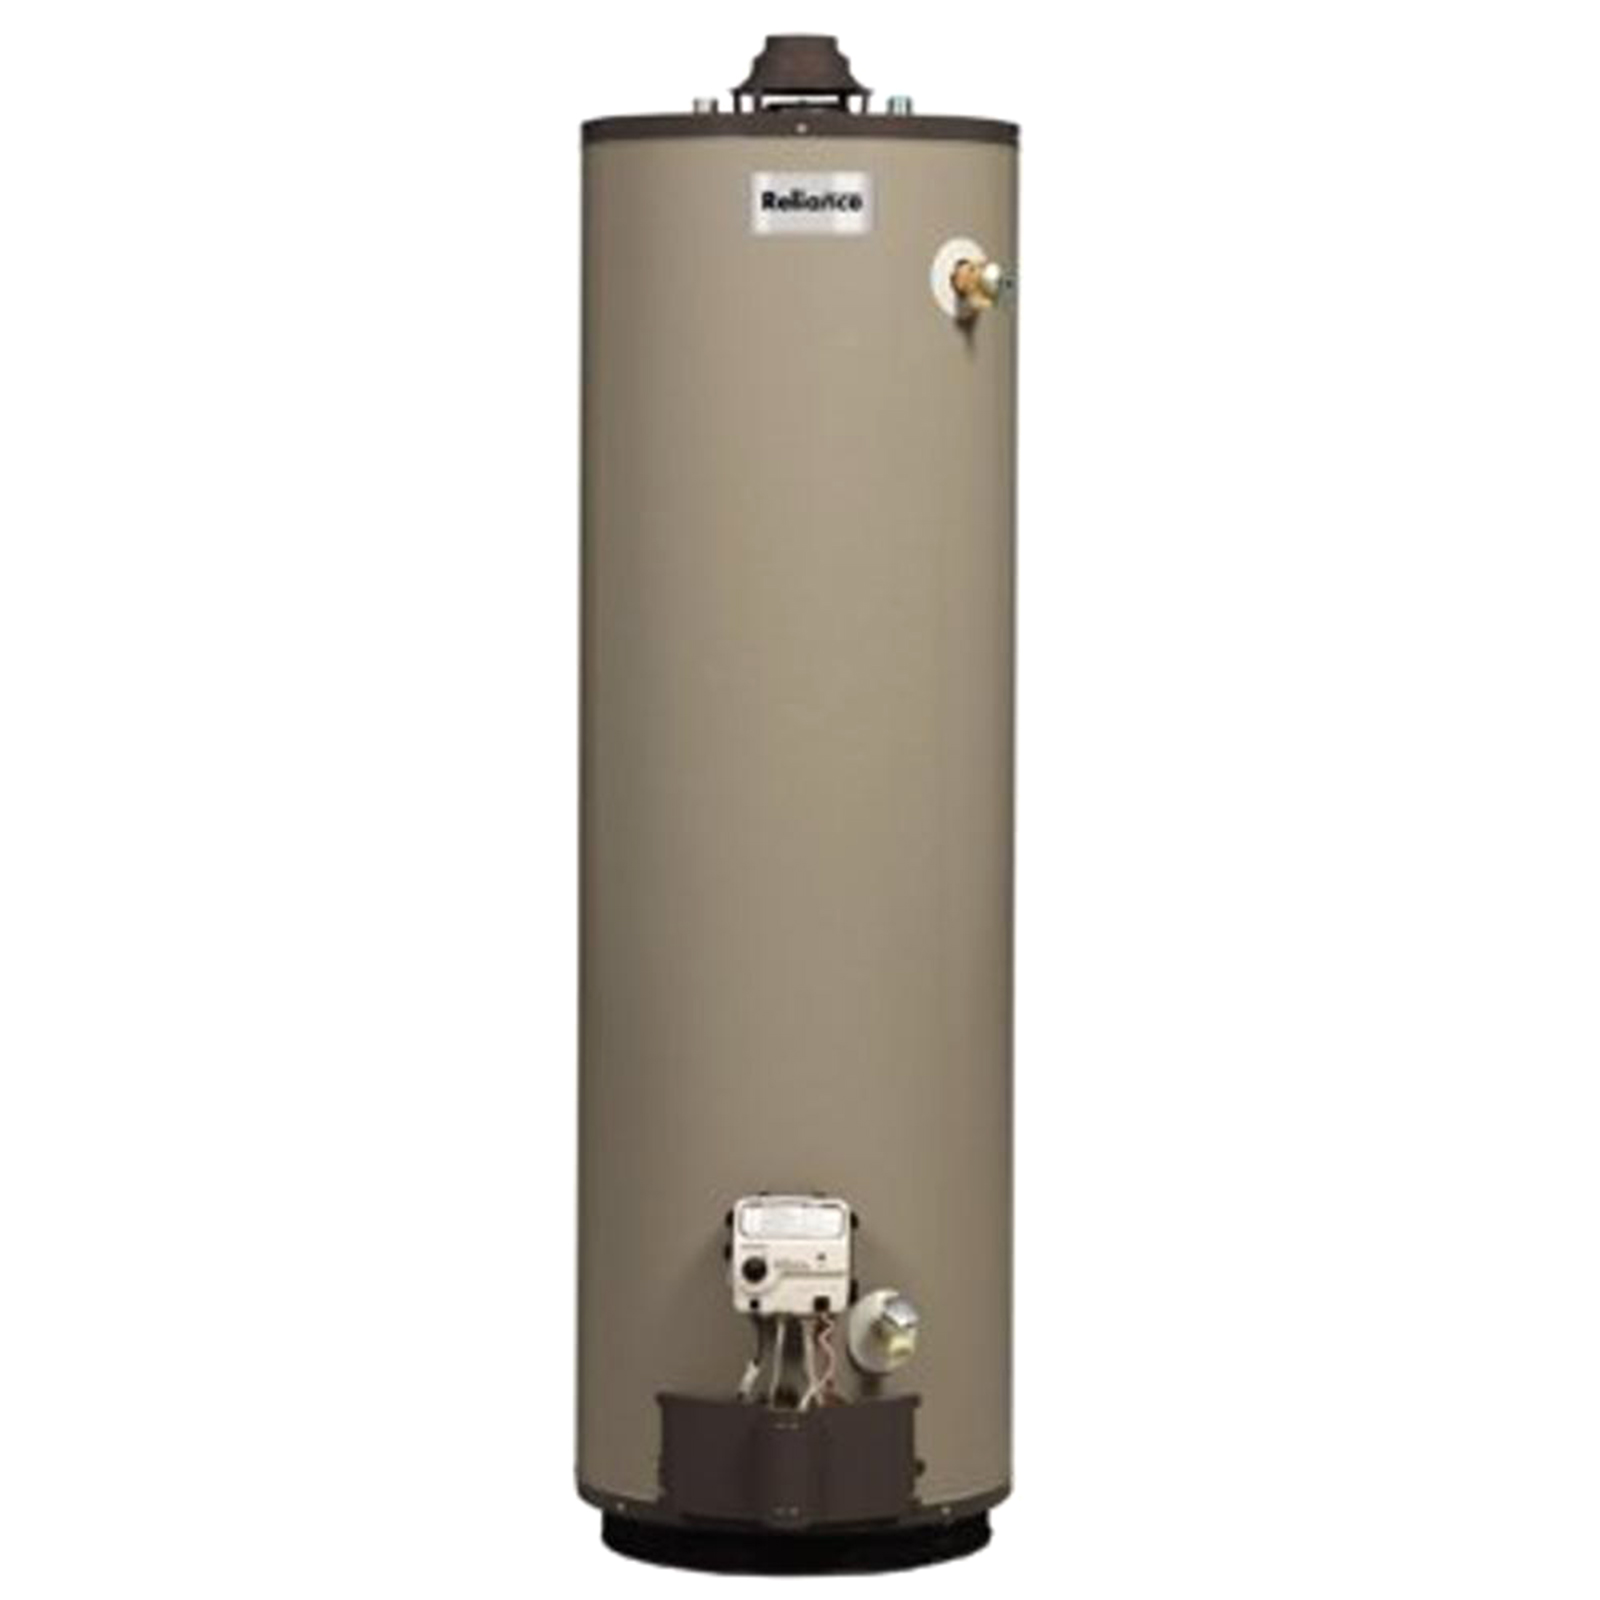 Reliance 9-40-NKCT400  40gal Water Heater